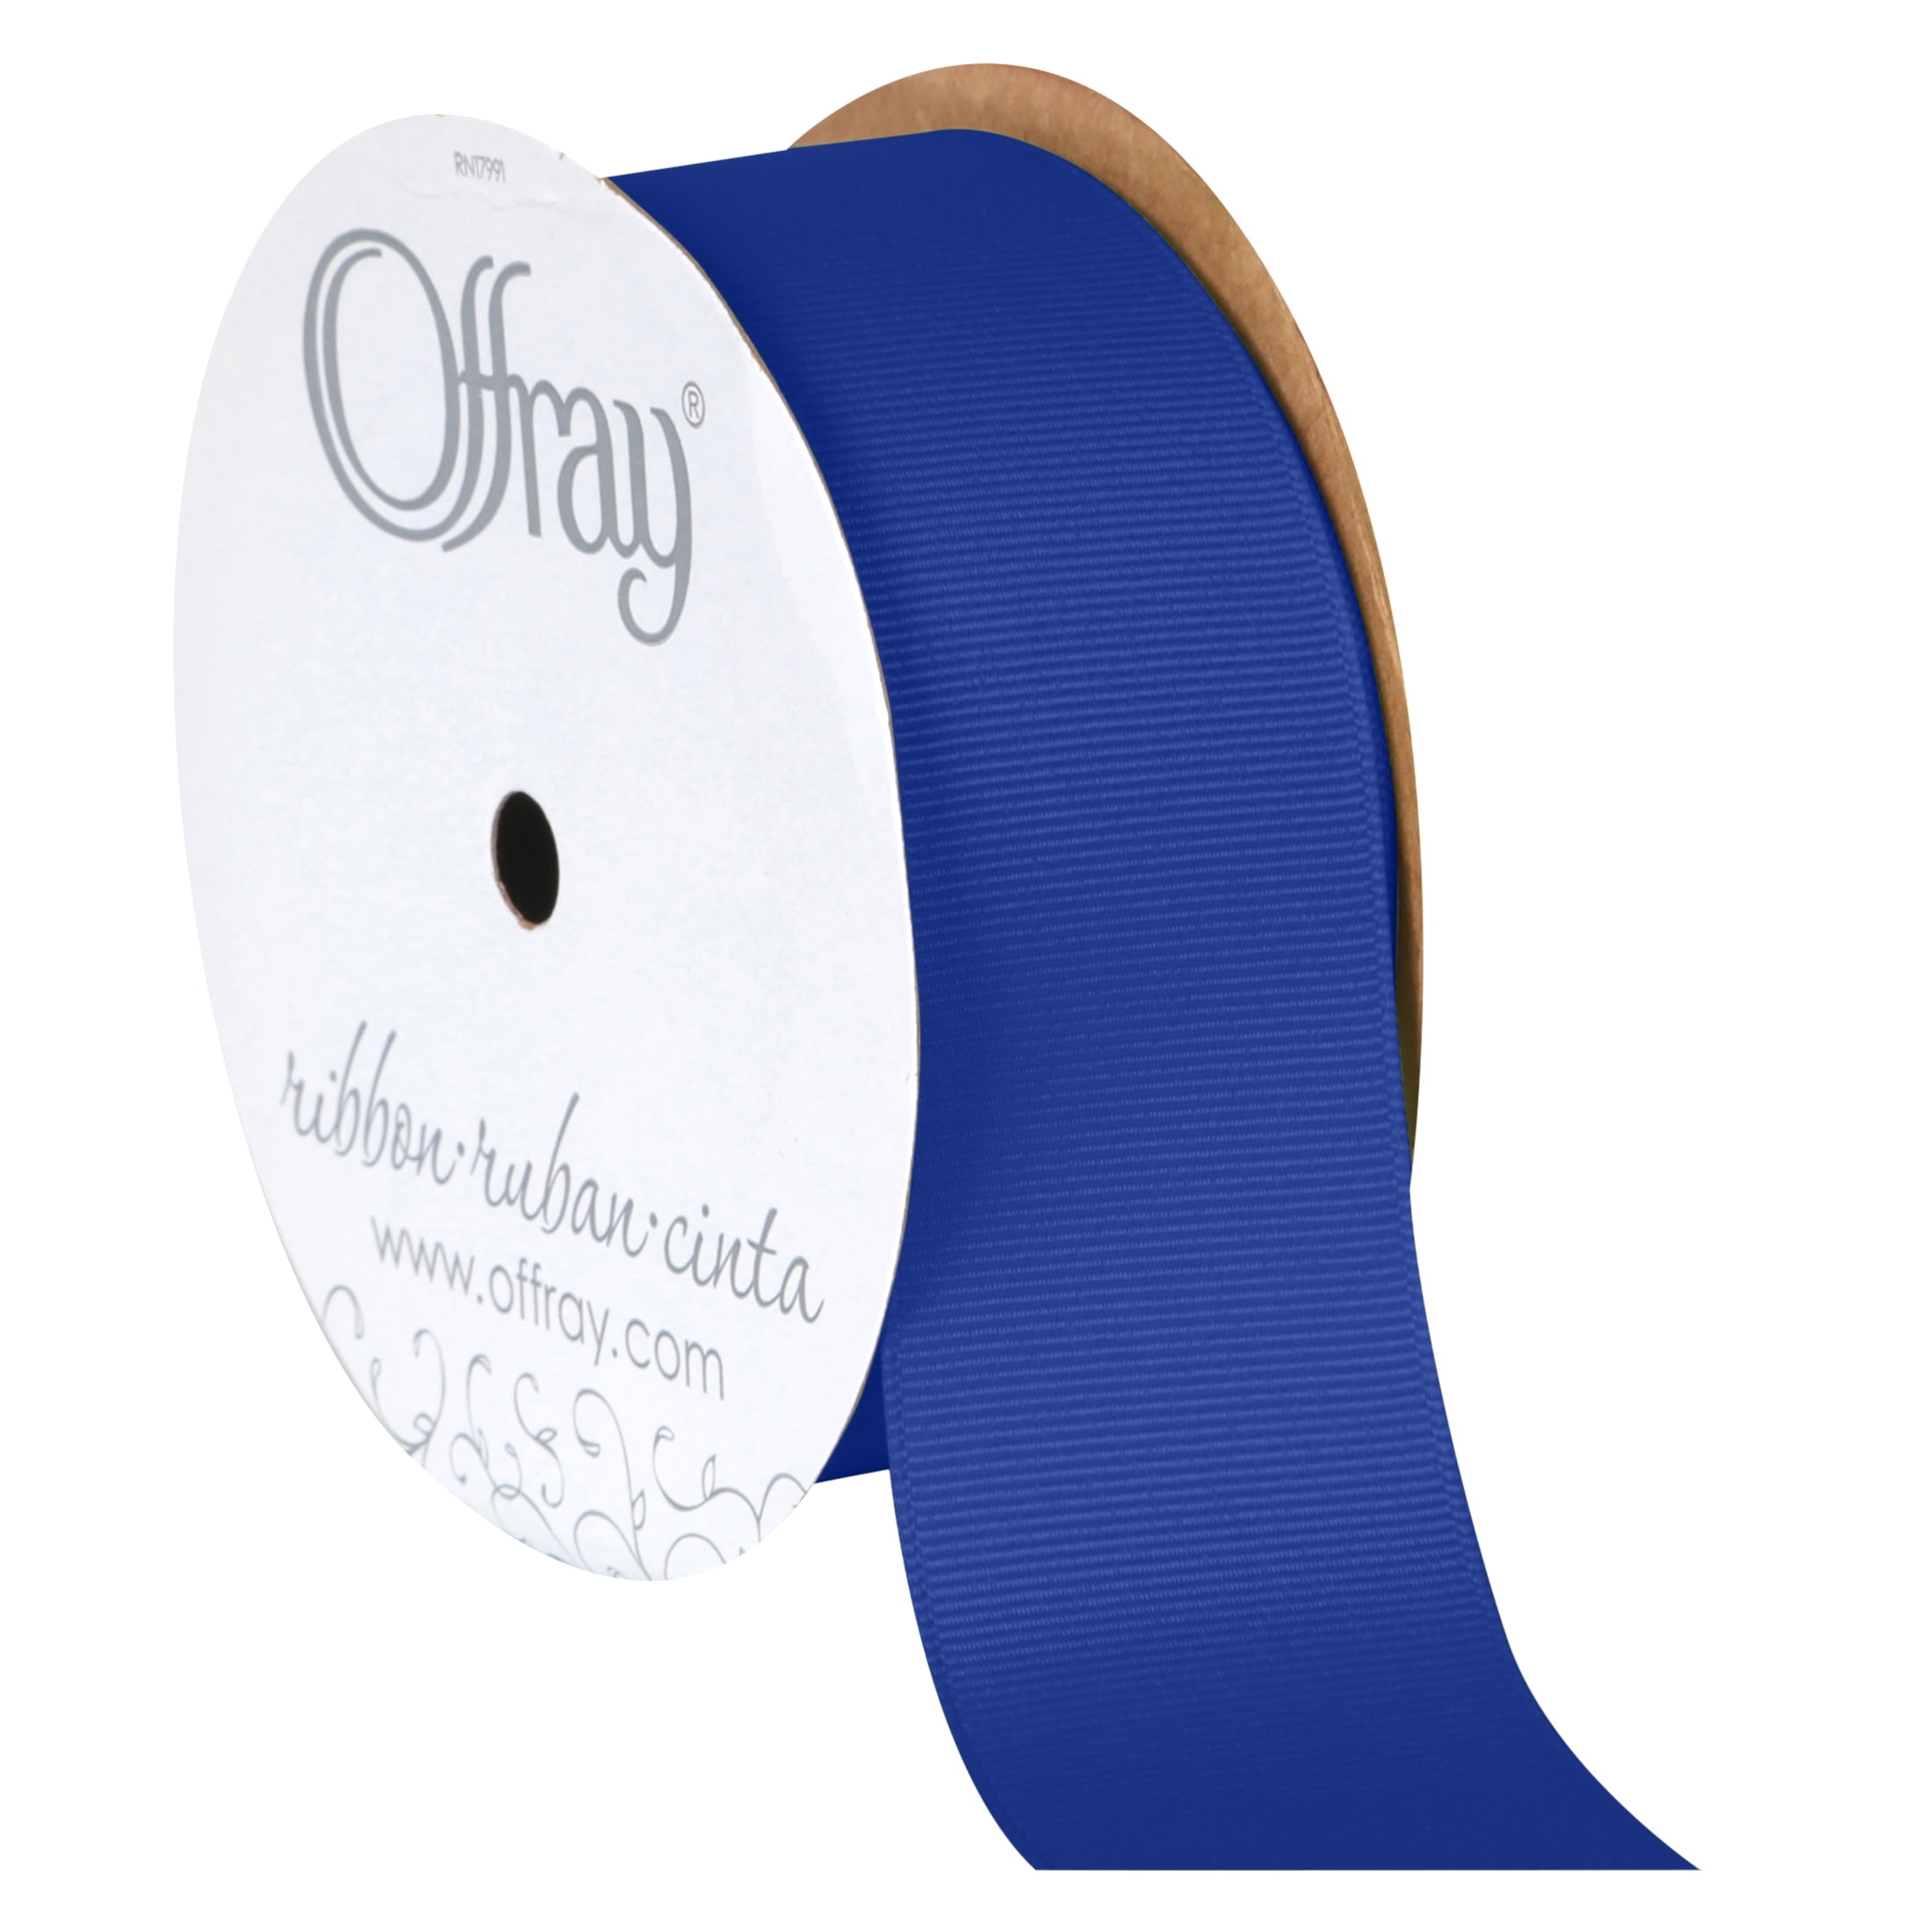  Offray 67284 1.5 Wide Grosgrain Ribbon, 1-1/2 Inch x 12 Feet,  Century Blue